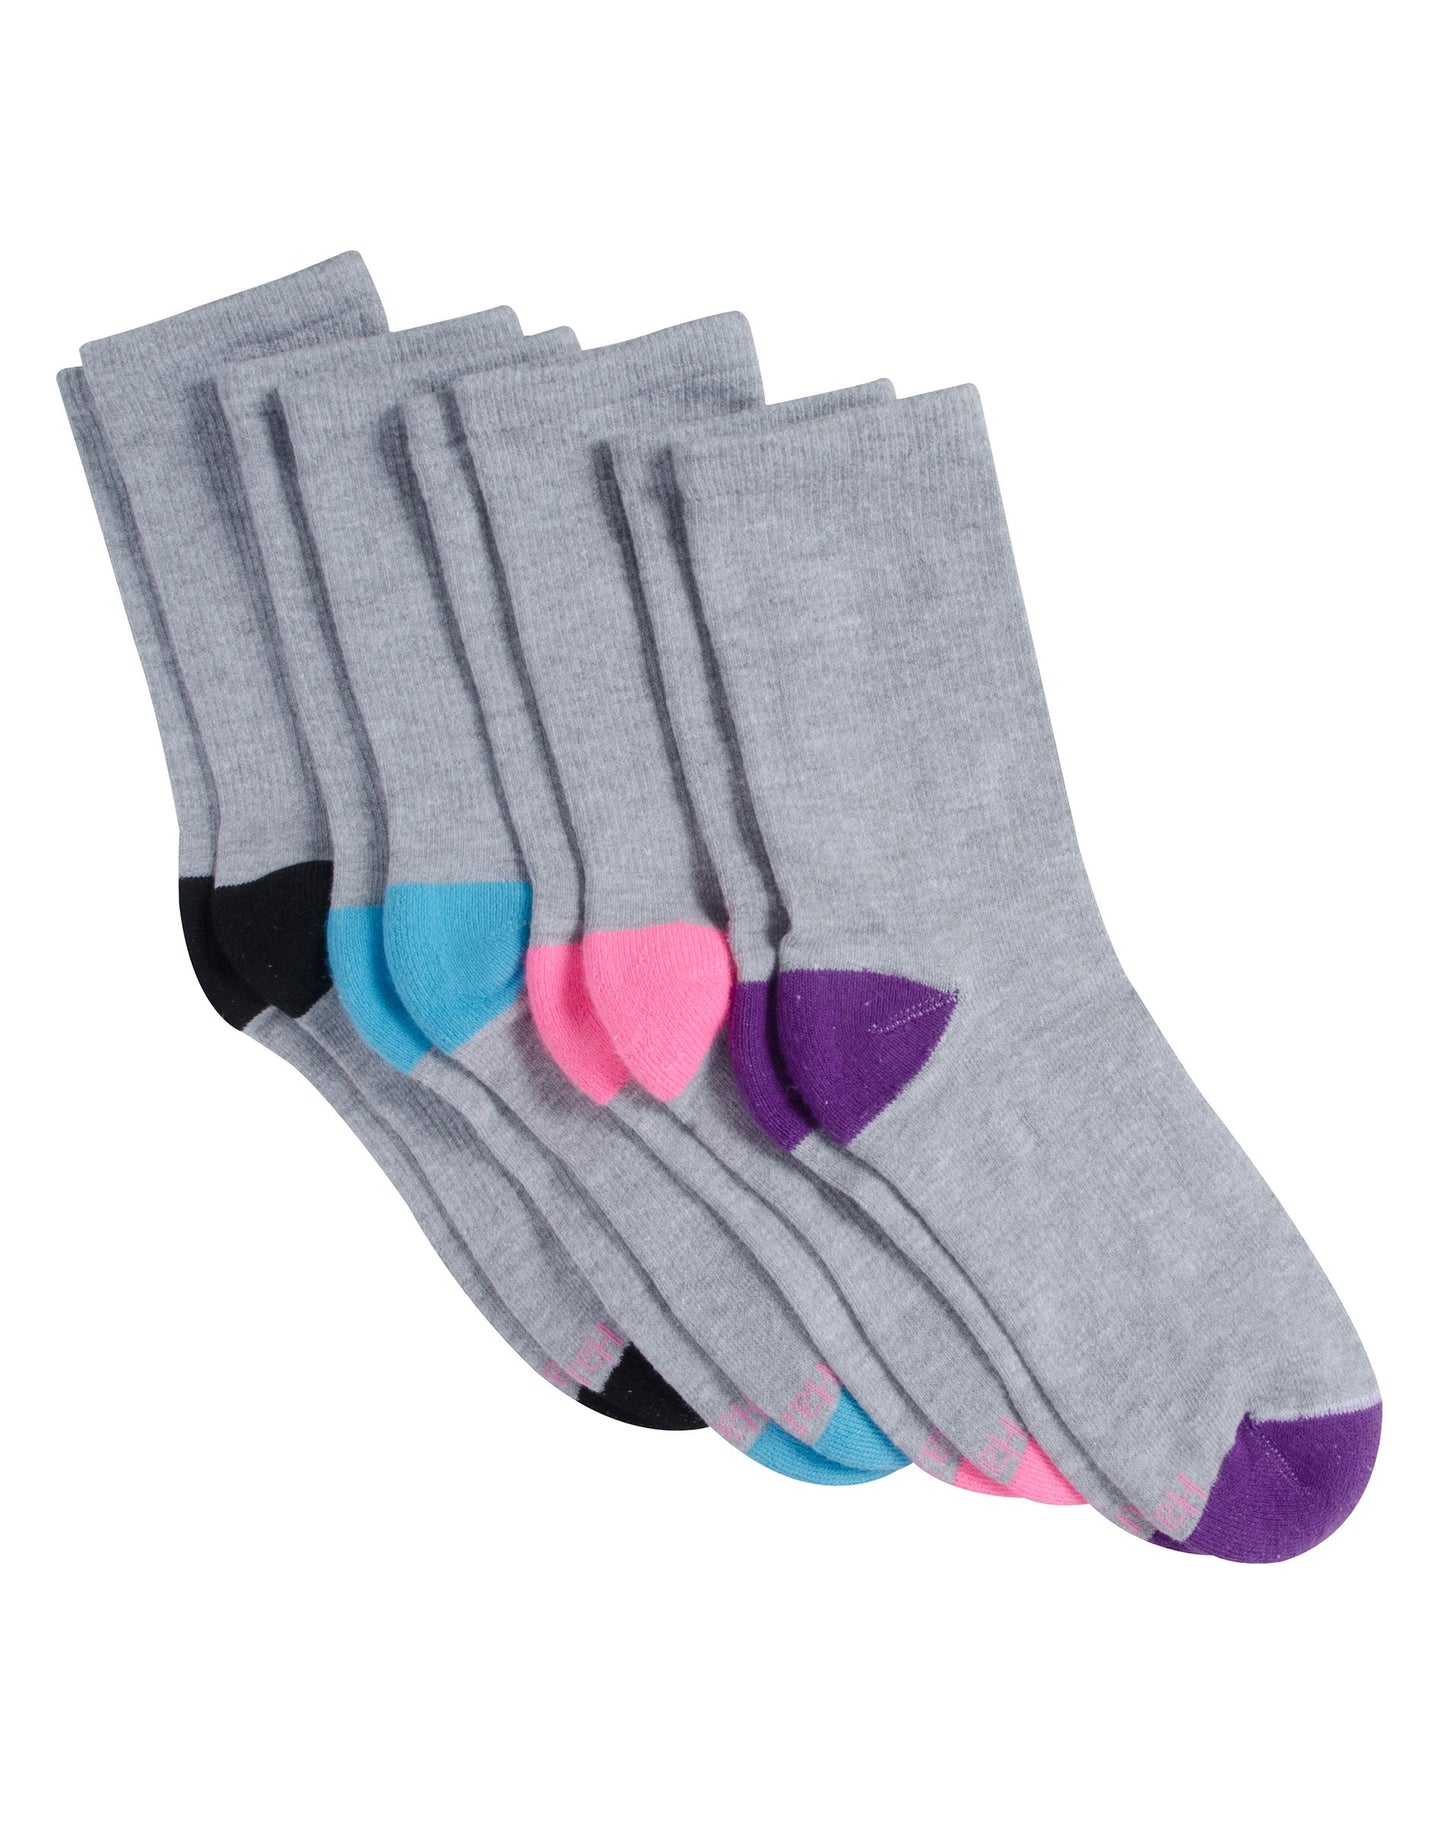 Hanes Women's Comfort FIt Crew Socks, 4-Pack Assortment 1 5-9